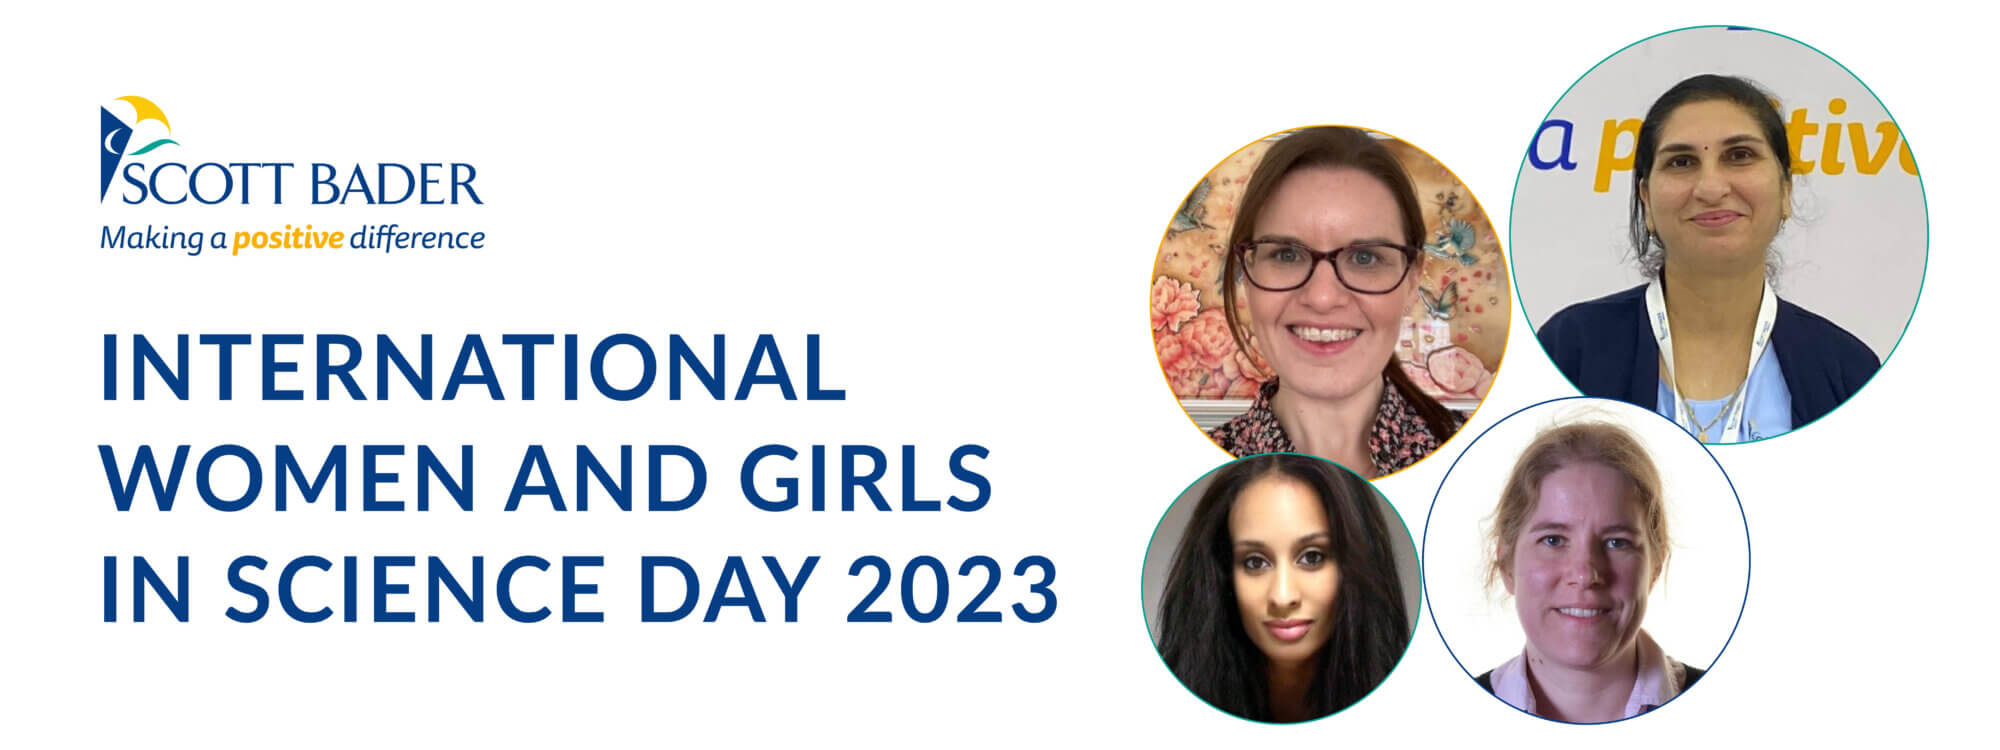 Scott Bader celebrating international women and girls in science day 2023!